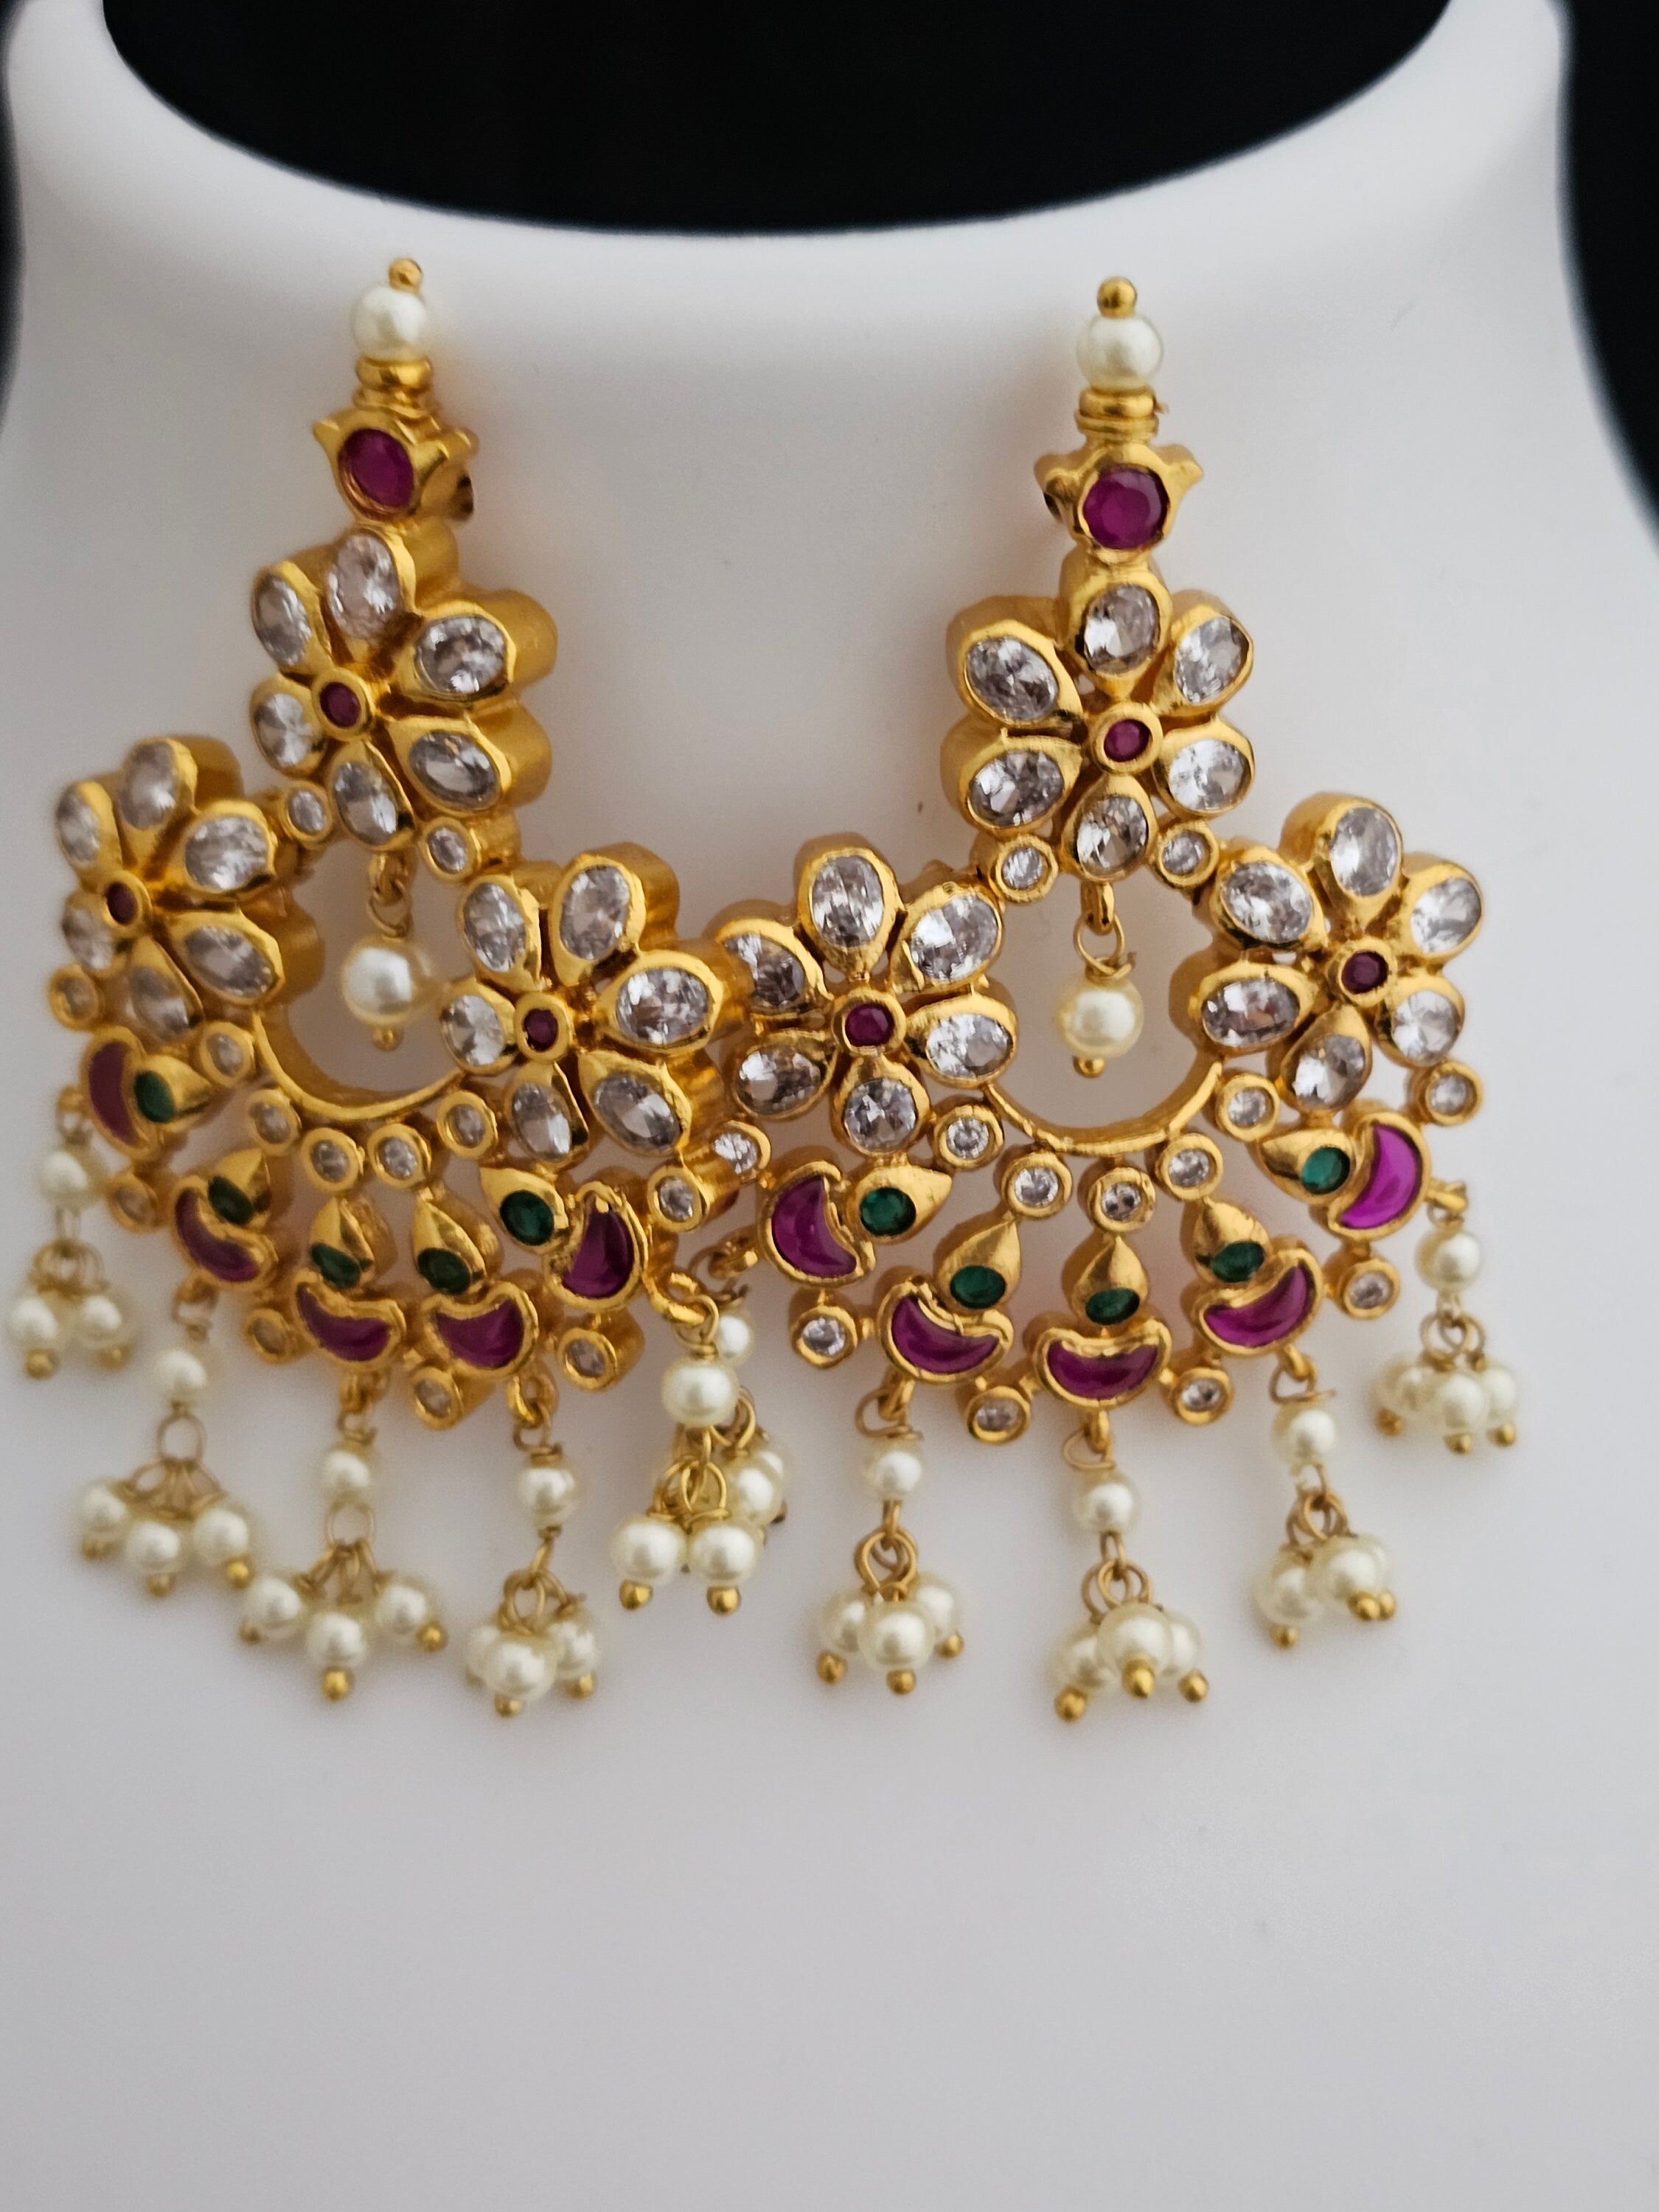 Premium quality Guttapusalu chandbali Gold Jewelry Replica Haram with with matching Chandbali Earrings